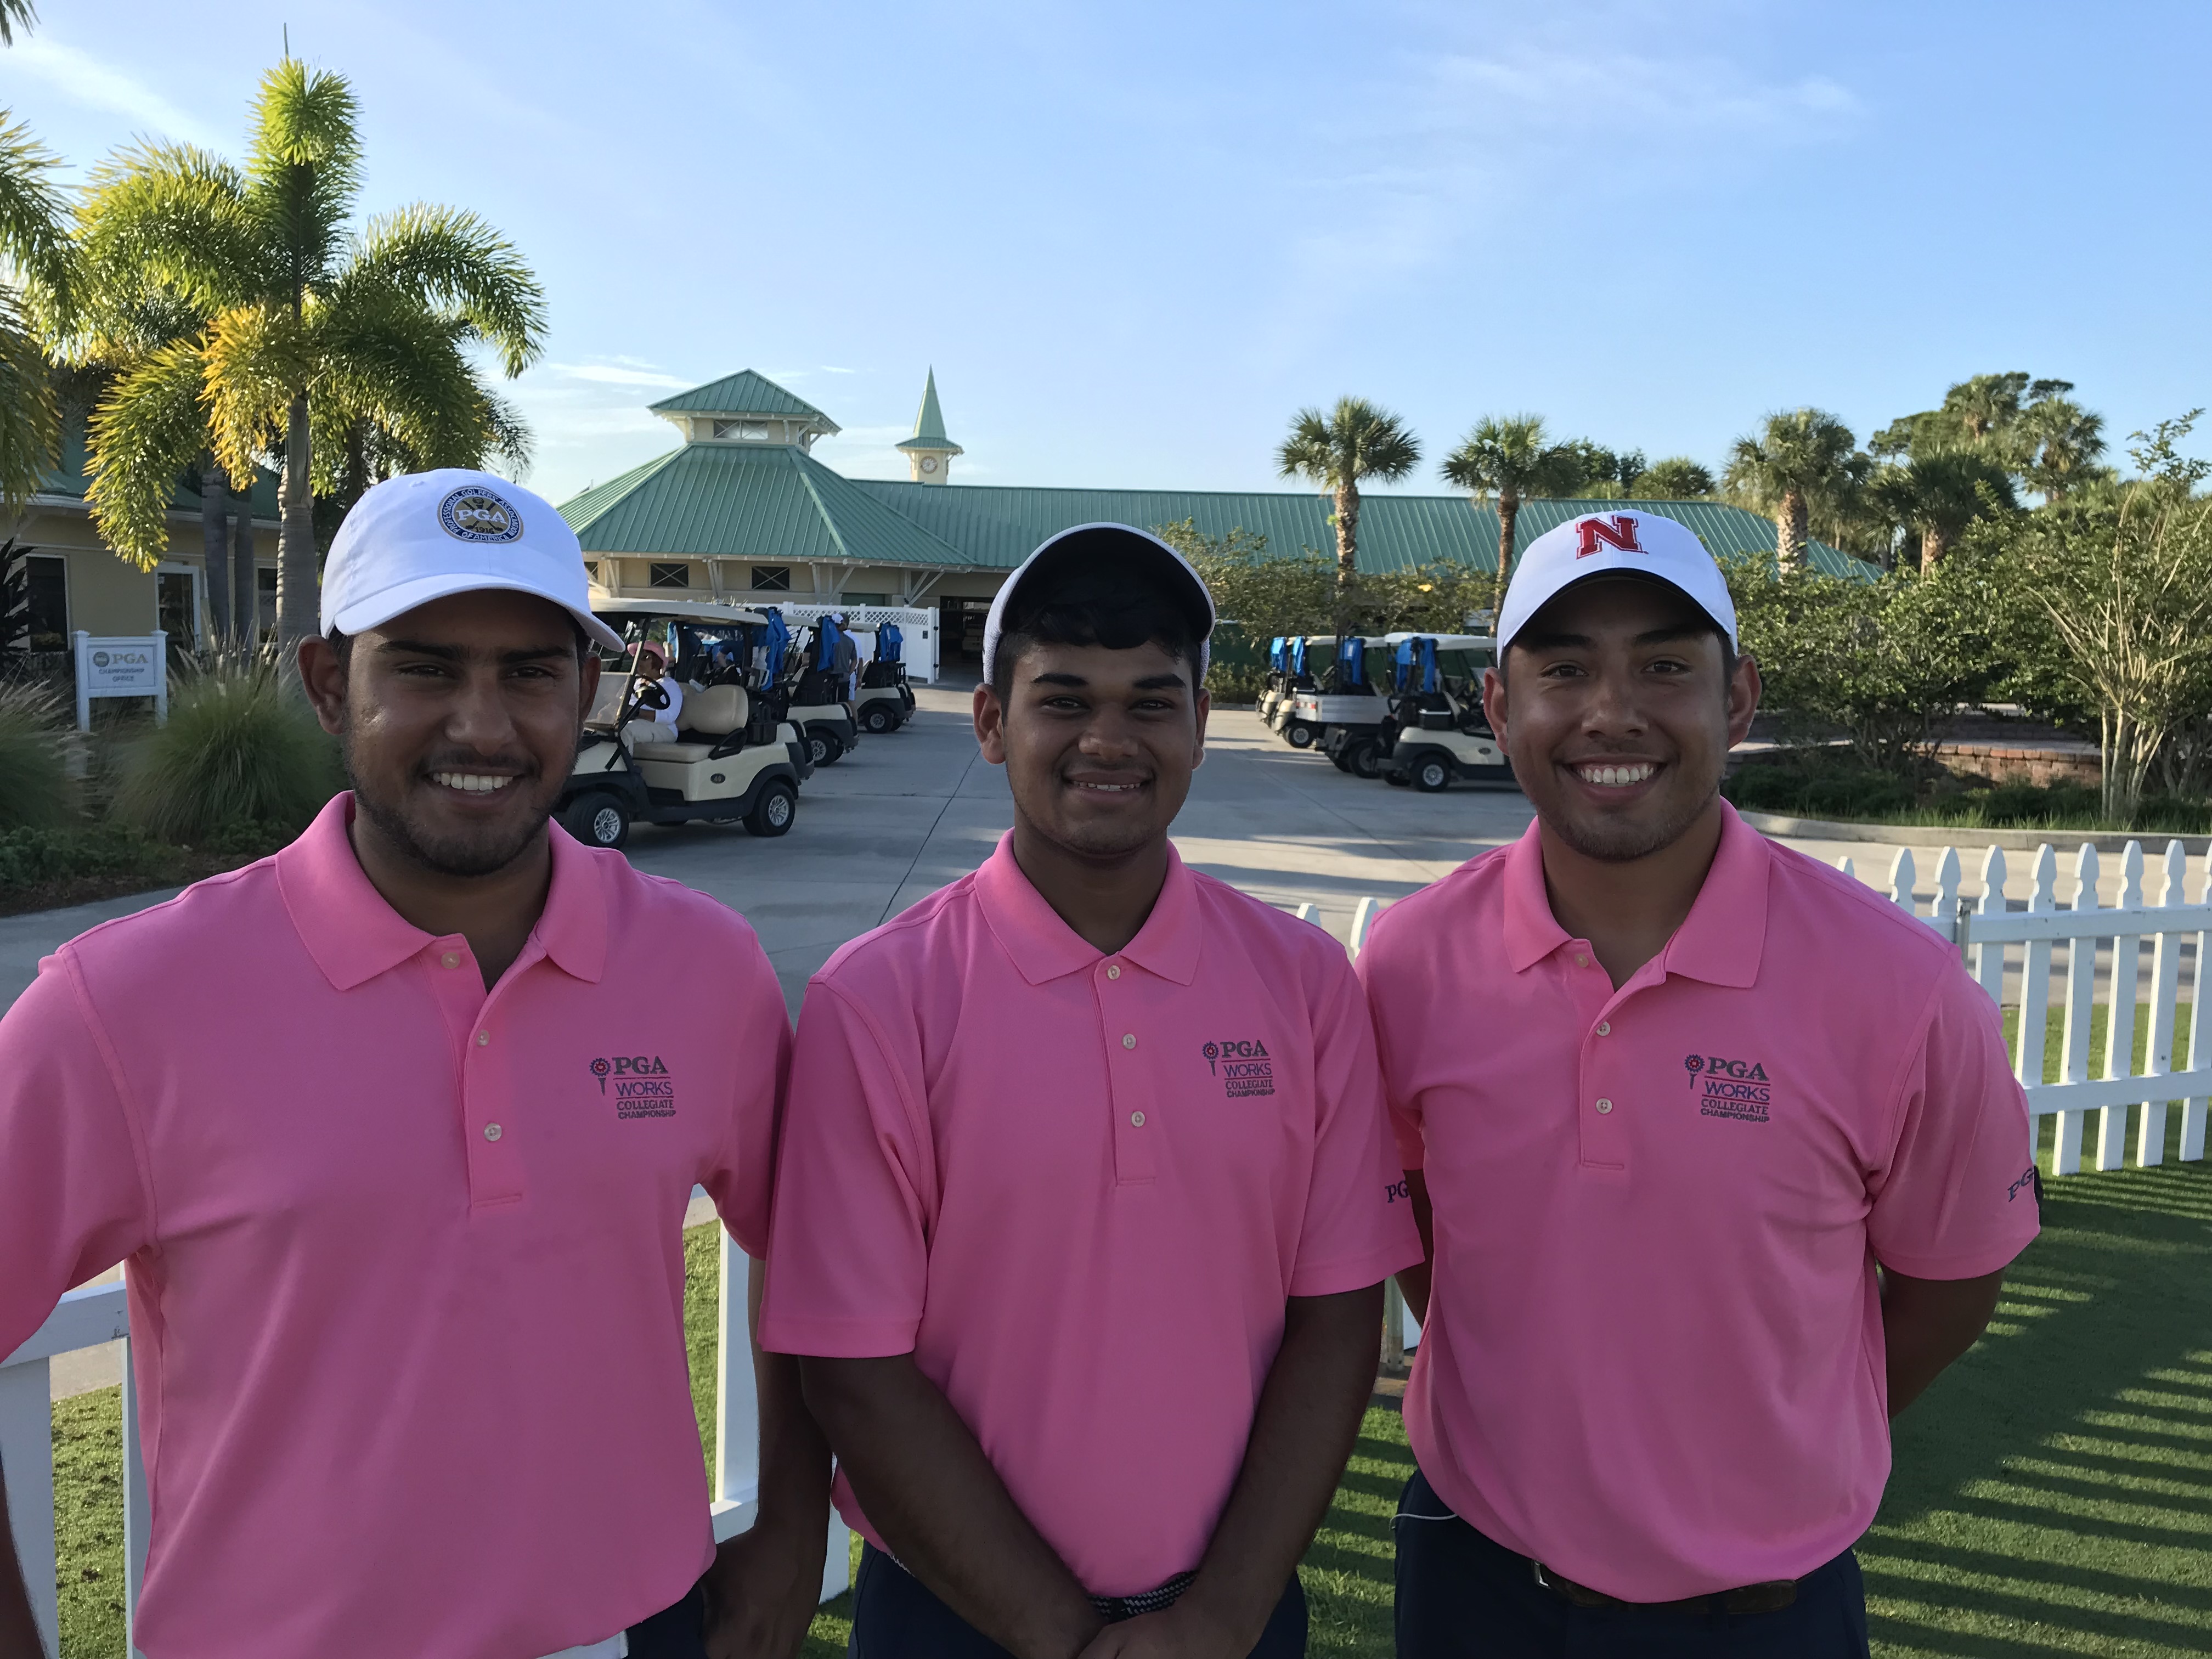 Left to right, Nakual Paliwal, Arihant Mittal, and TJ Loudner Represents UNL at PGAWORKS Championships in Florida.